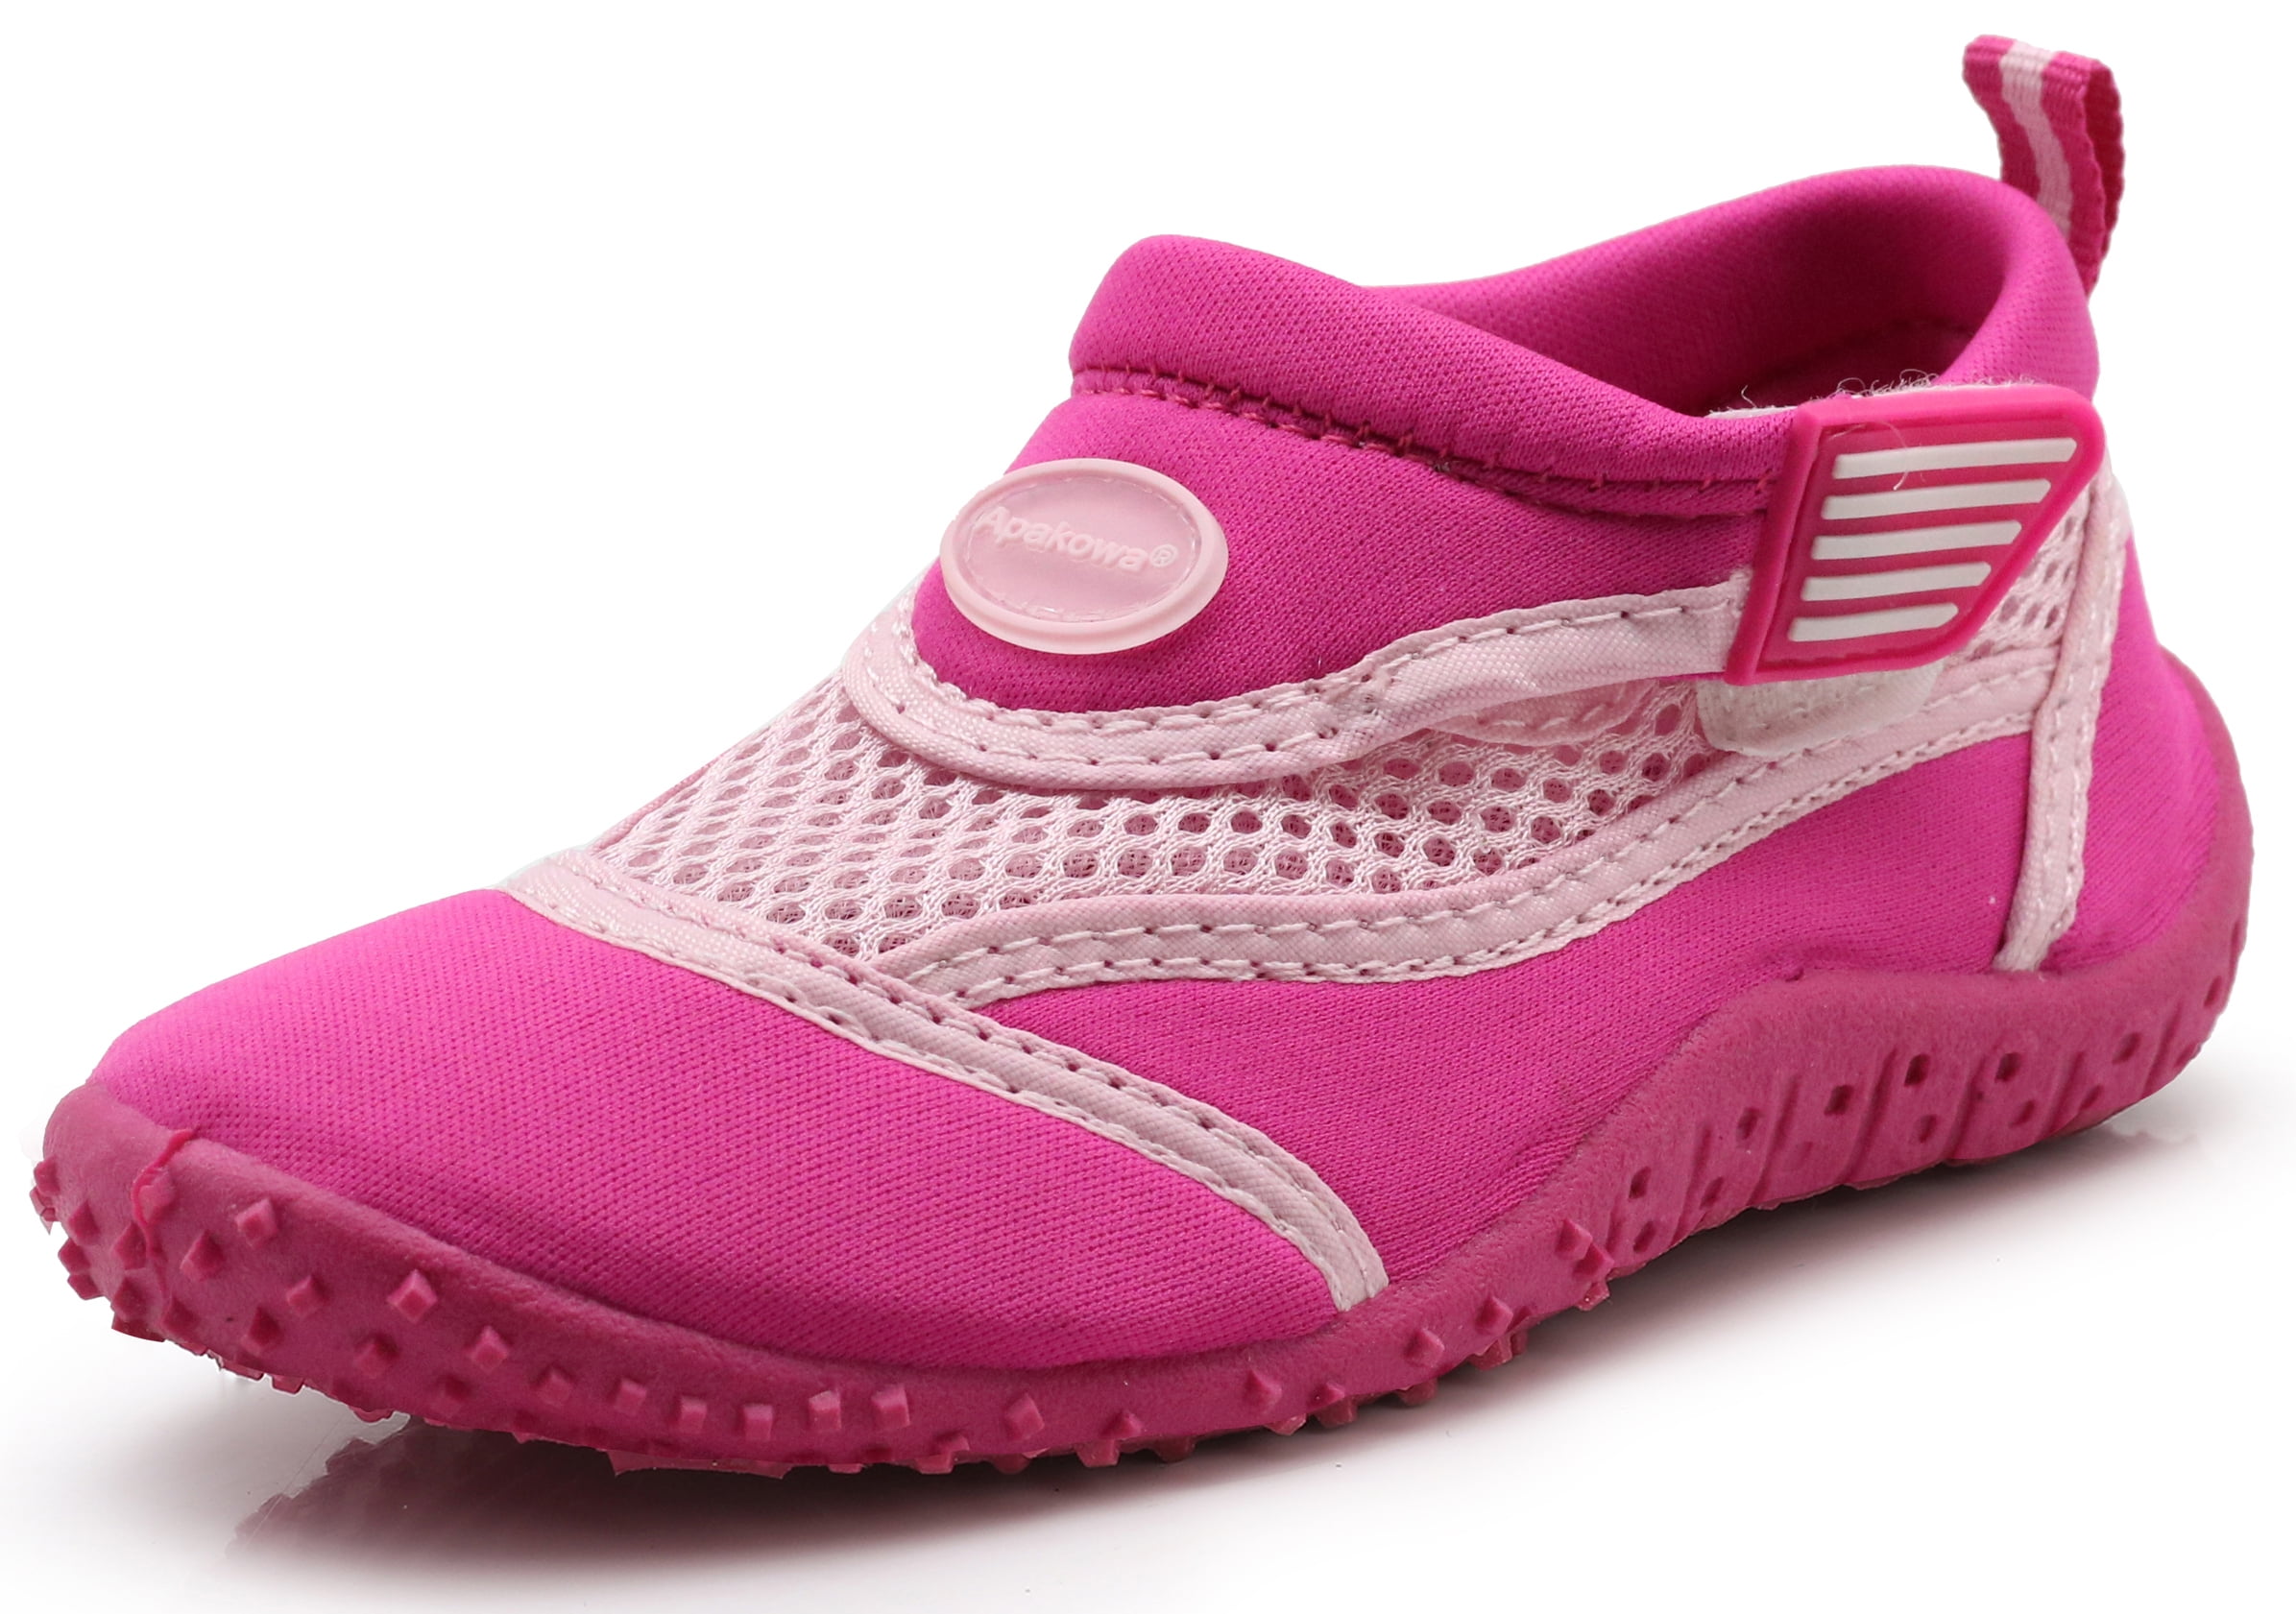 Toddler/Little Kid/Big Kid Boys & Girls Water Shoes Lightweight Comfort Sole Easy Walking Athletic Slip on Aqua 5 Toe Sock 